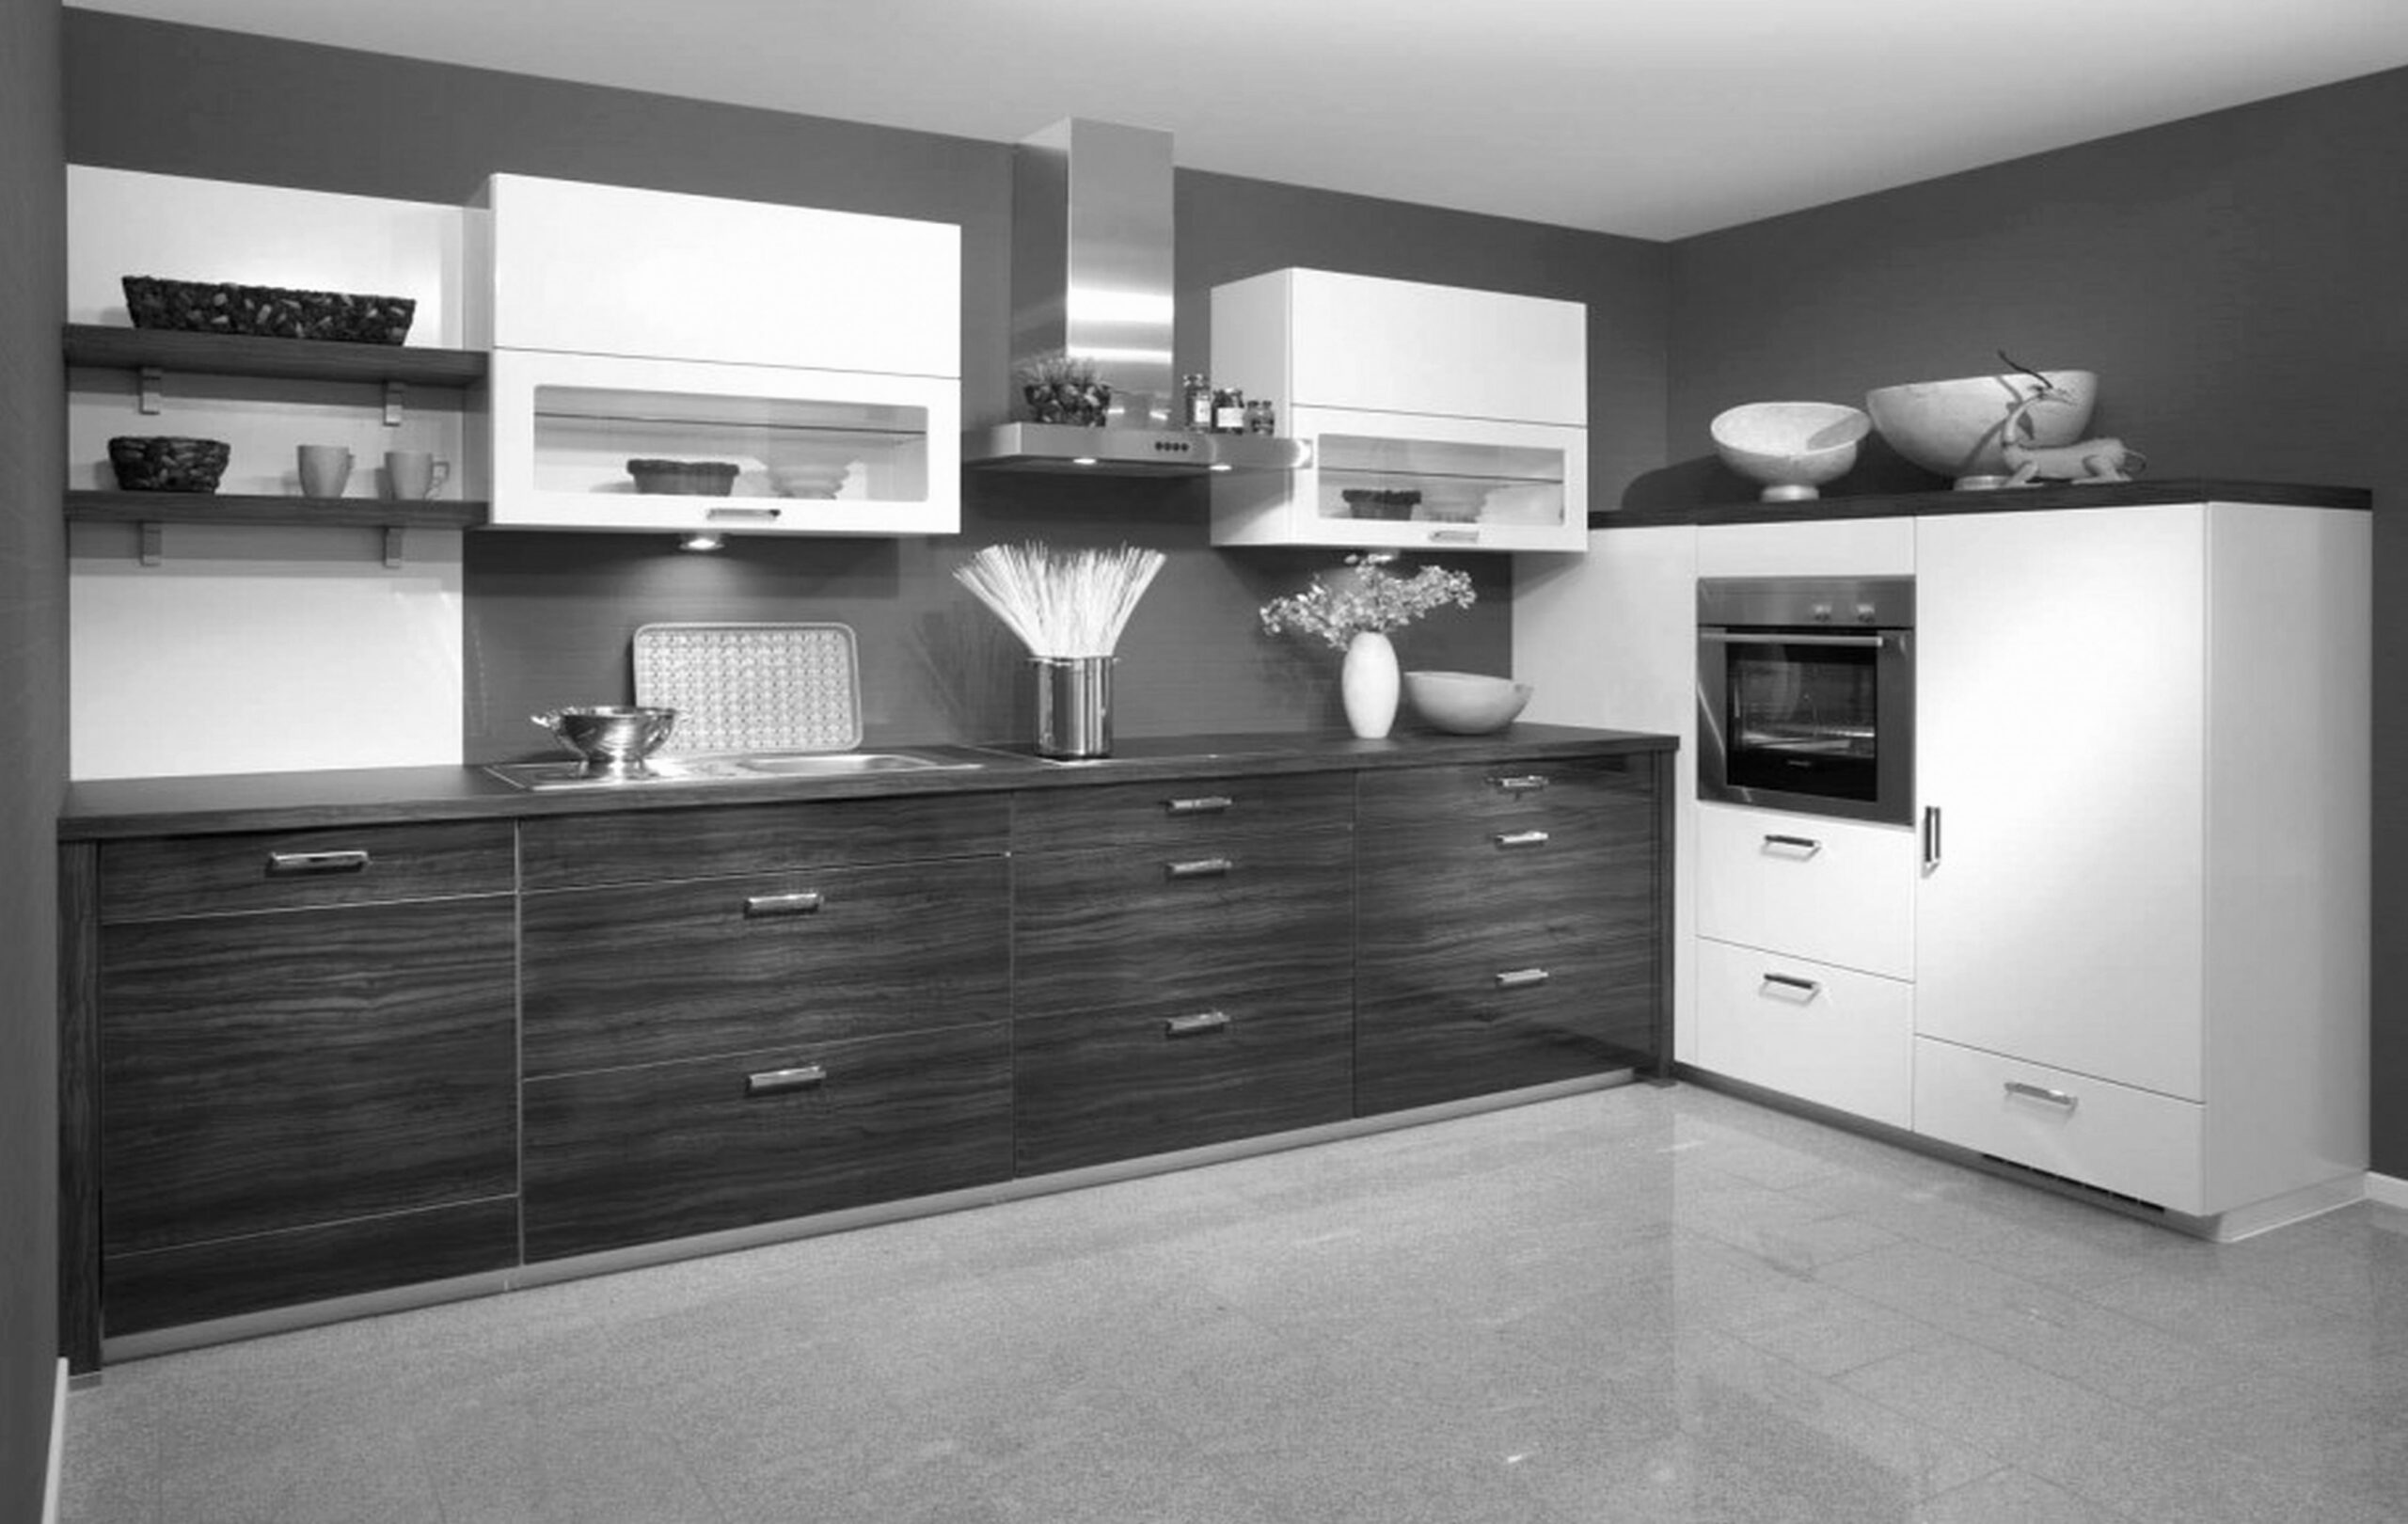 Kitchen Ideas with White Brick Backsplash Lovely White Kitchen Ideas 20 Awesome Scheme for Black and White